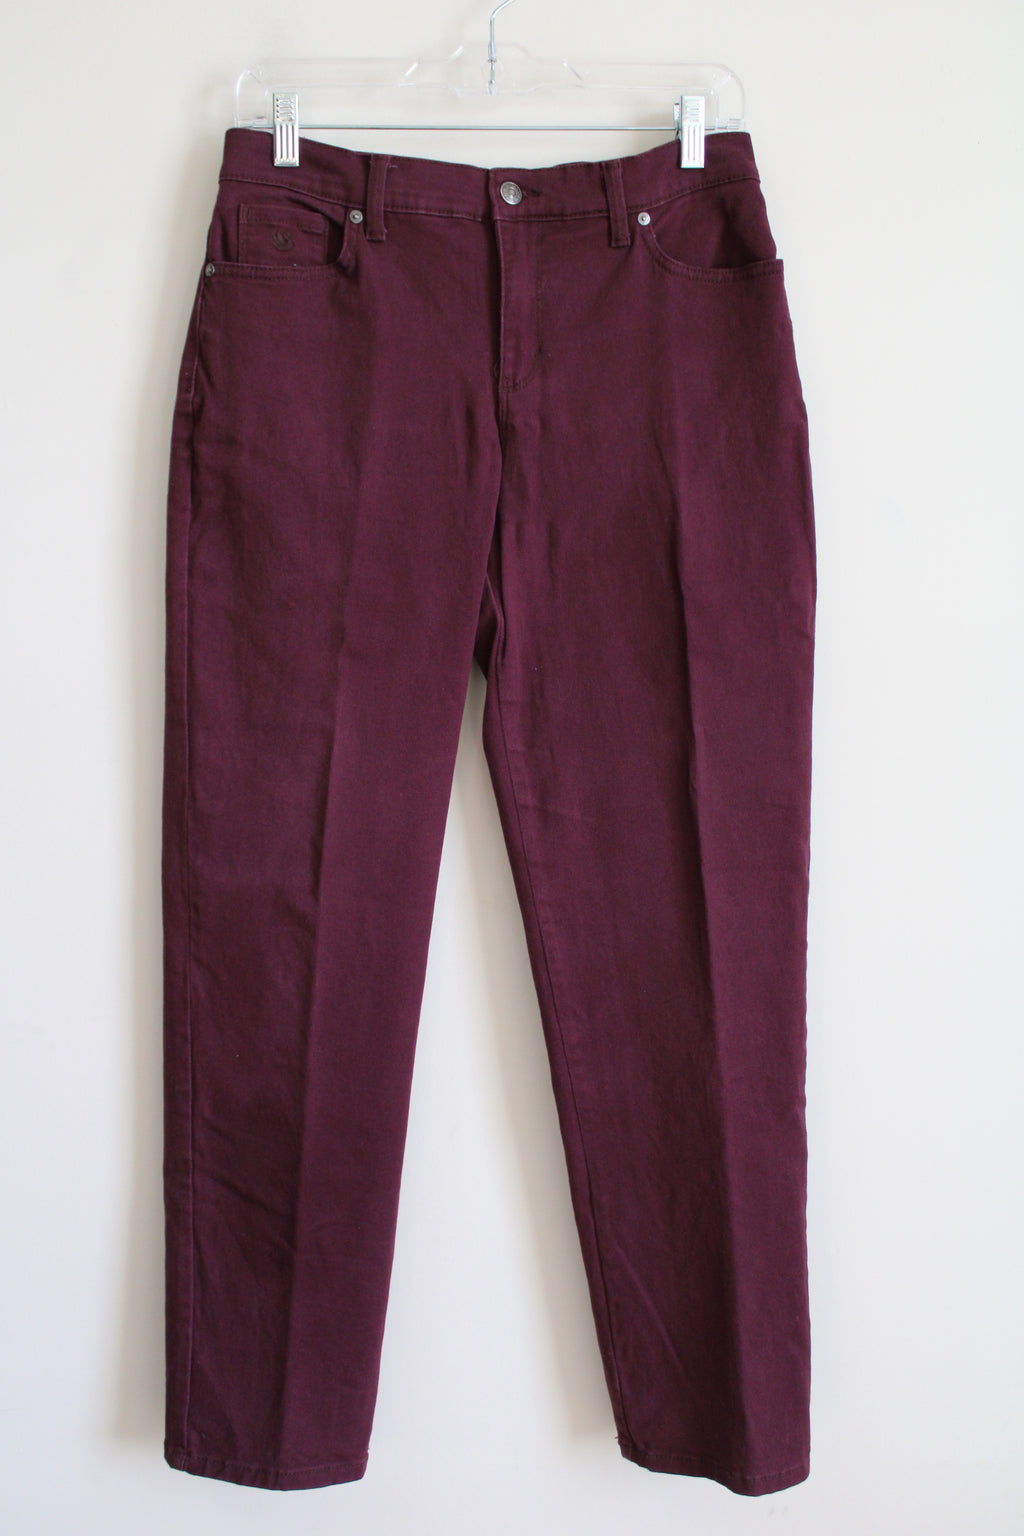 Gloria Vanderbilt Burgundy Denim Jeans | 6 Short